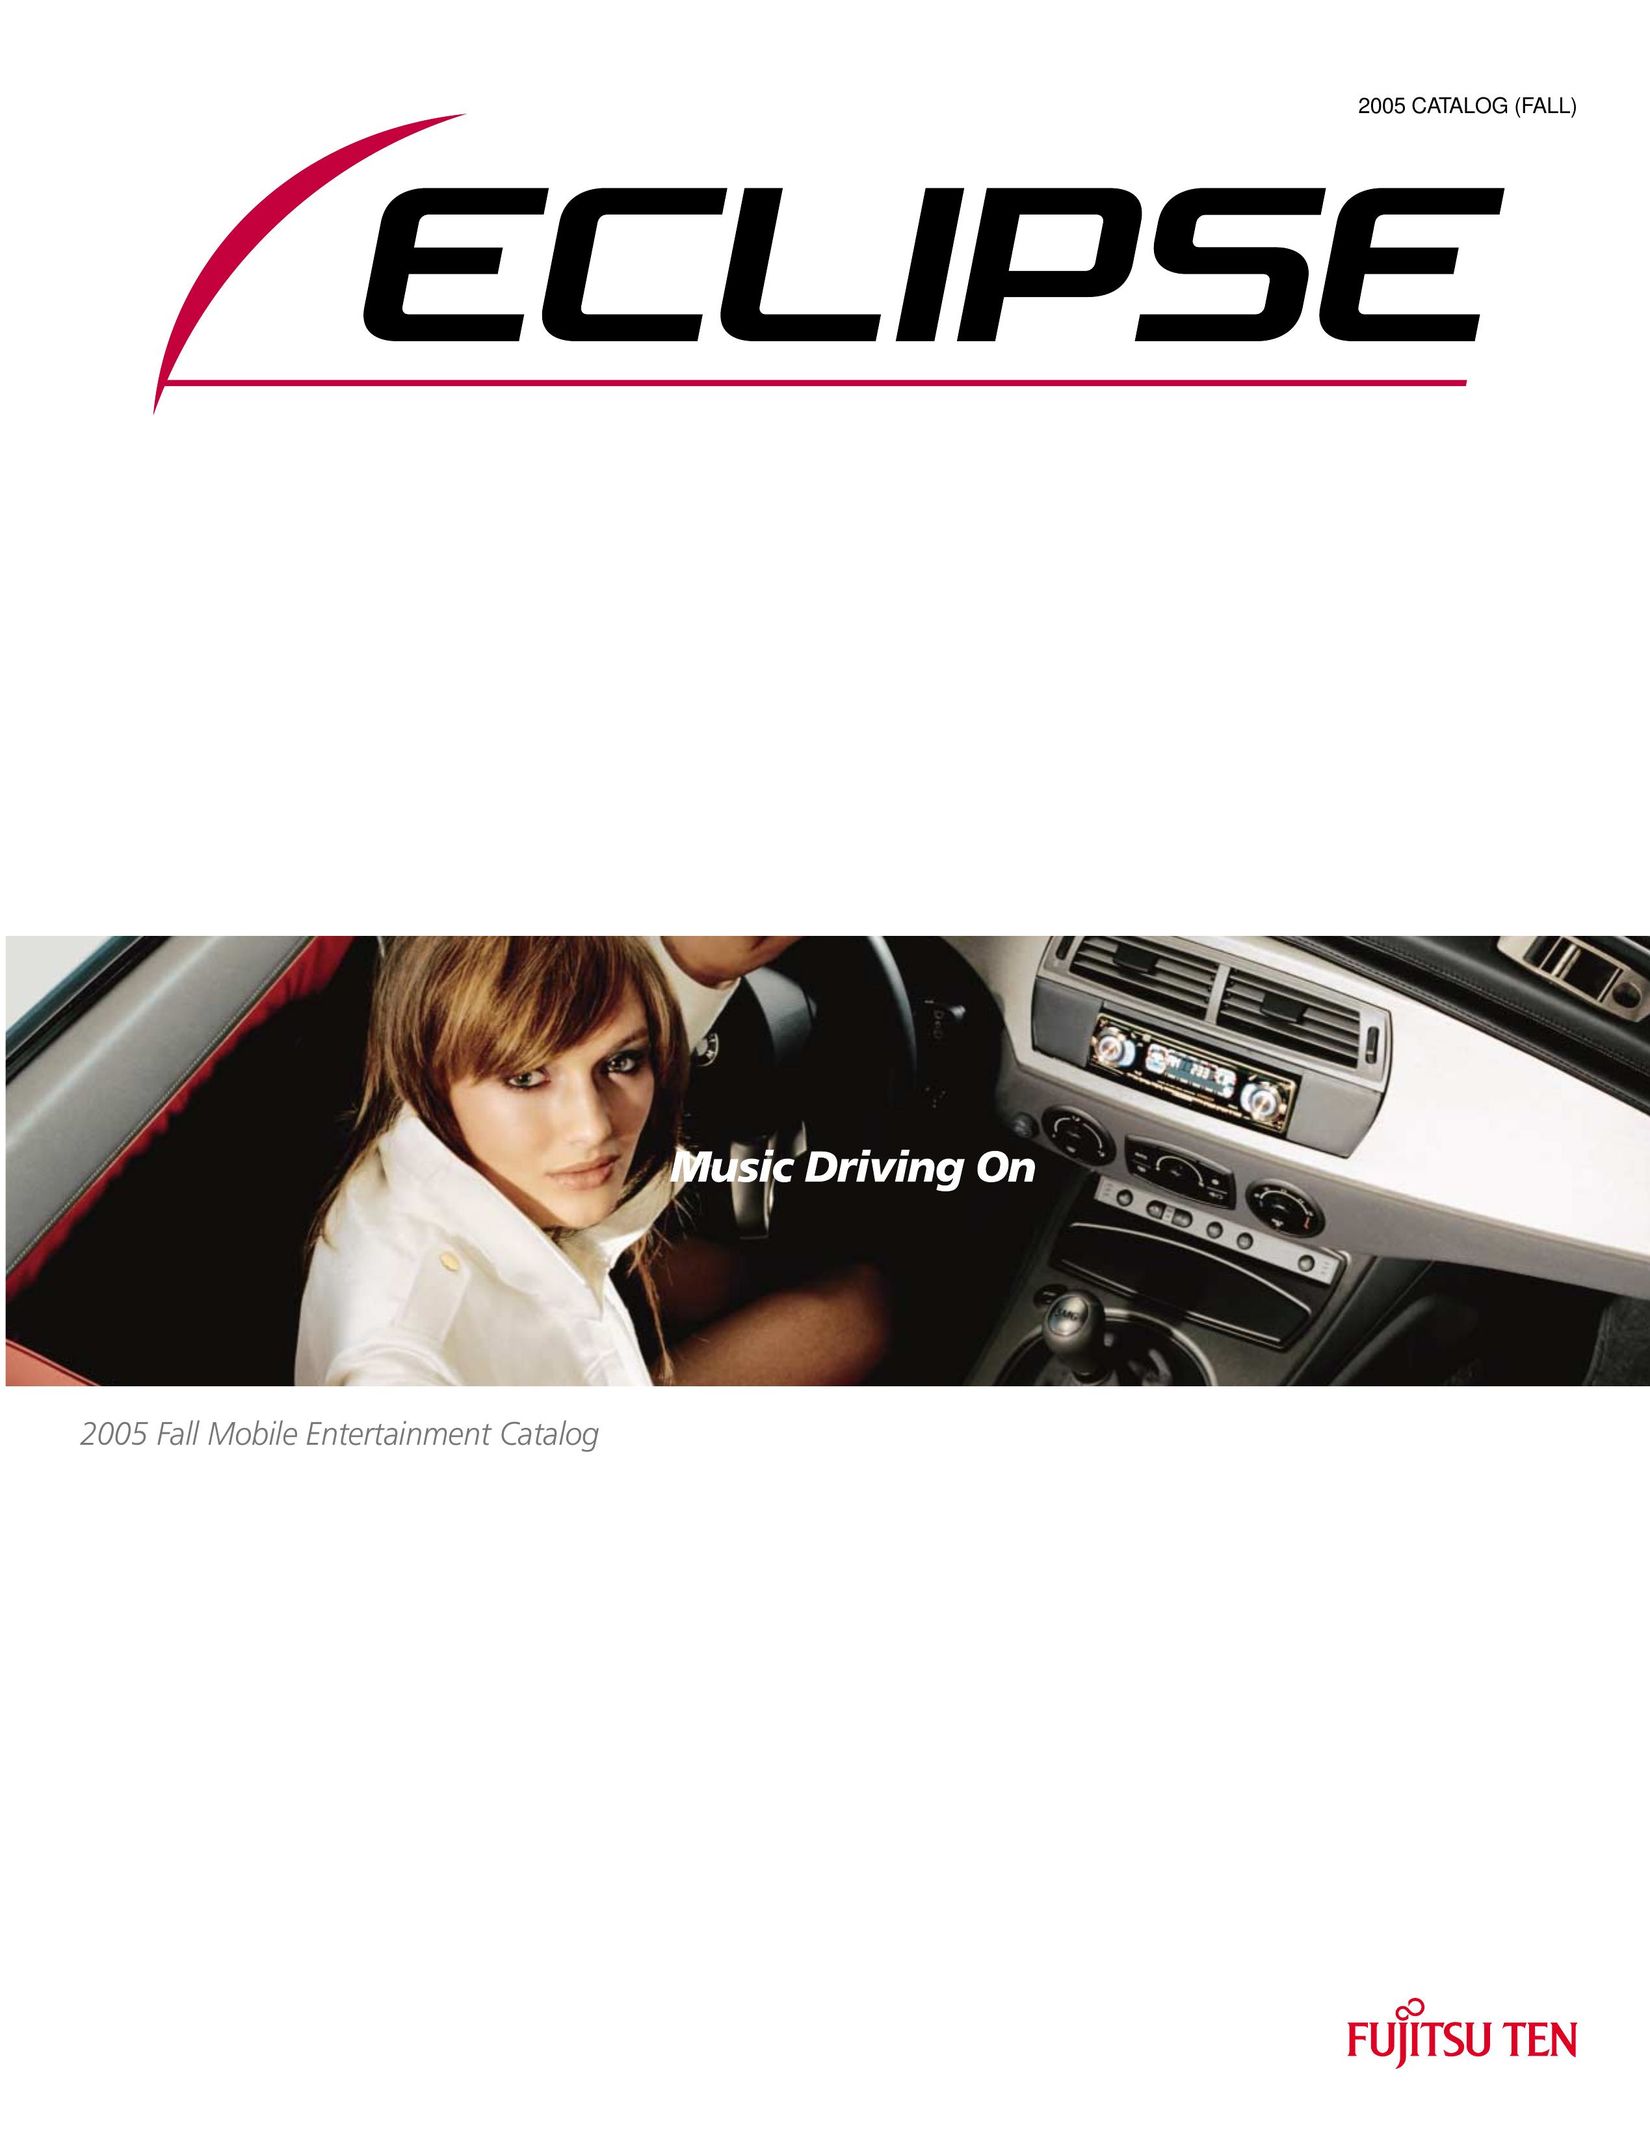 Eclipse - Fujitsu Ten TVR105 MP3 Player User Manual